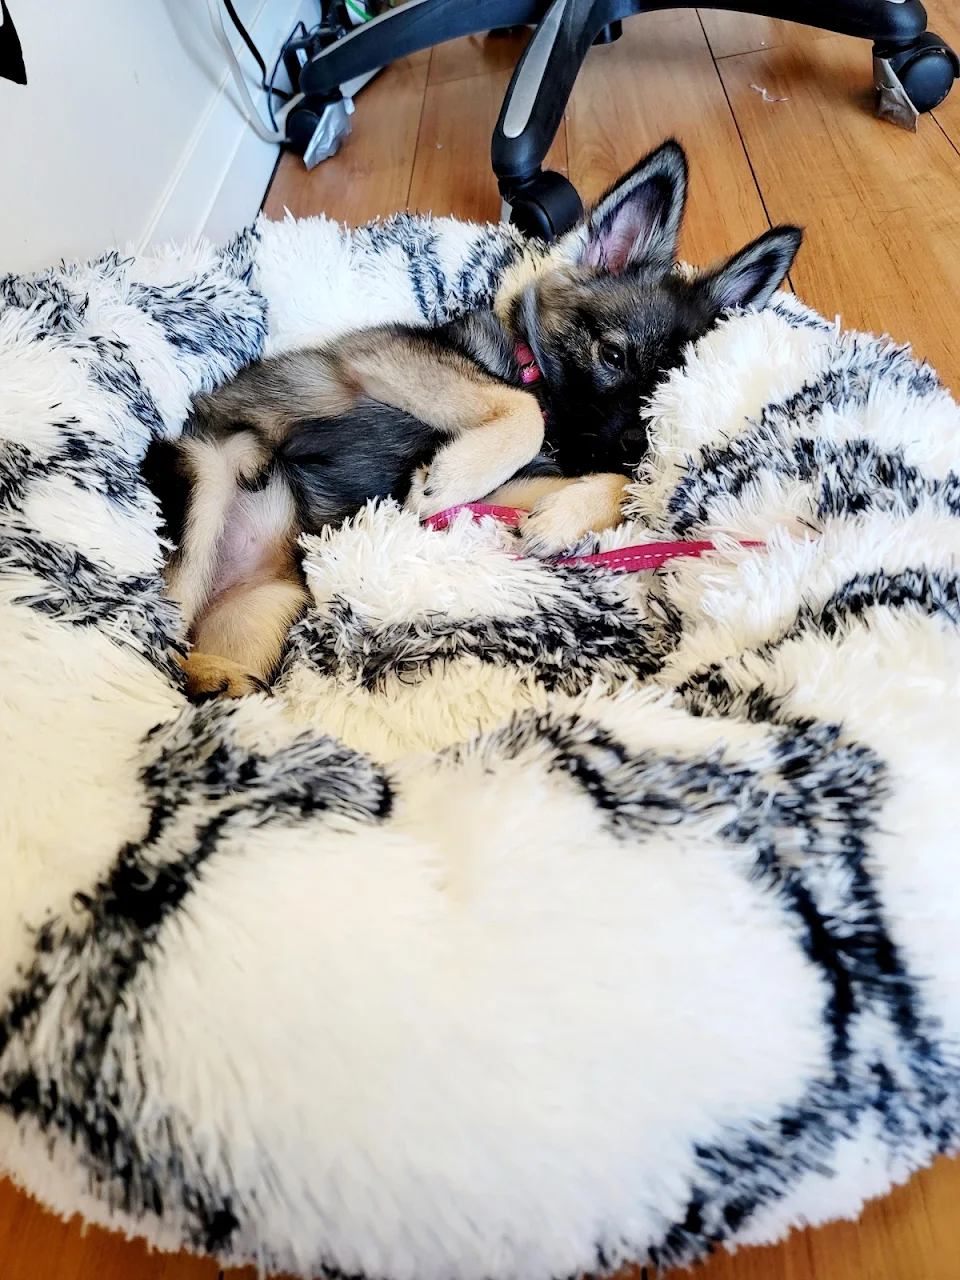 She loves her new bed